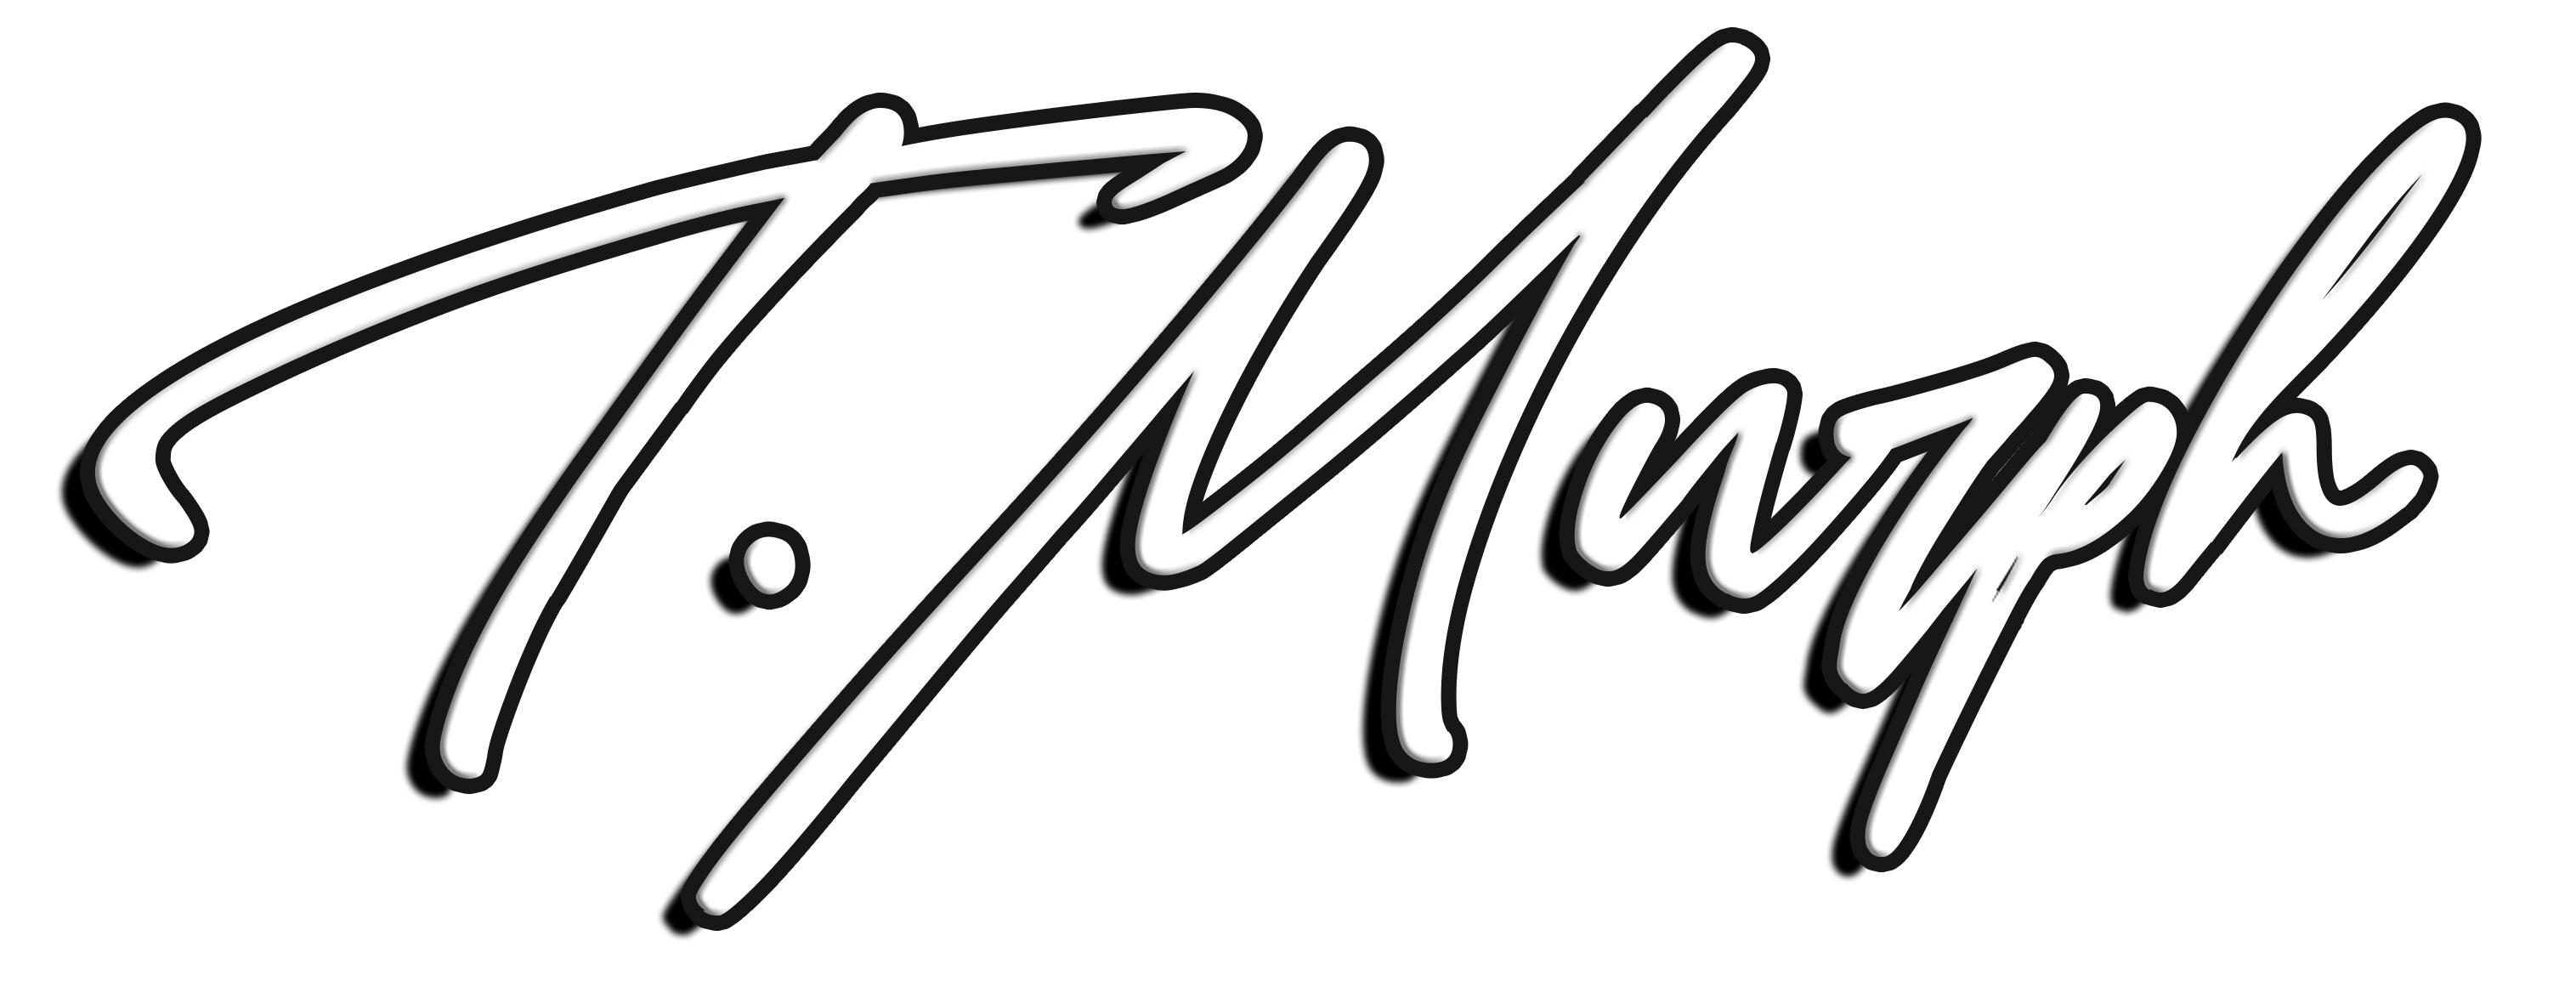 T. Murph: T. Murph Signature, Autograph, American Comedian Stars as ‘Clovis’, Woke TV Series. 3040x1180 Dual Screen Wallpaper.